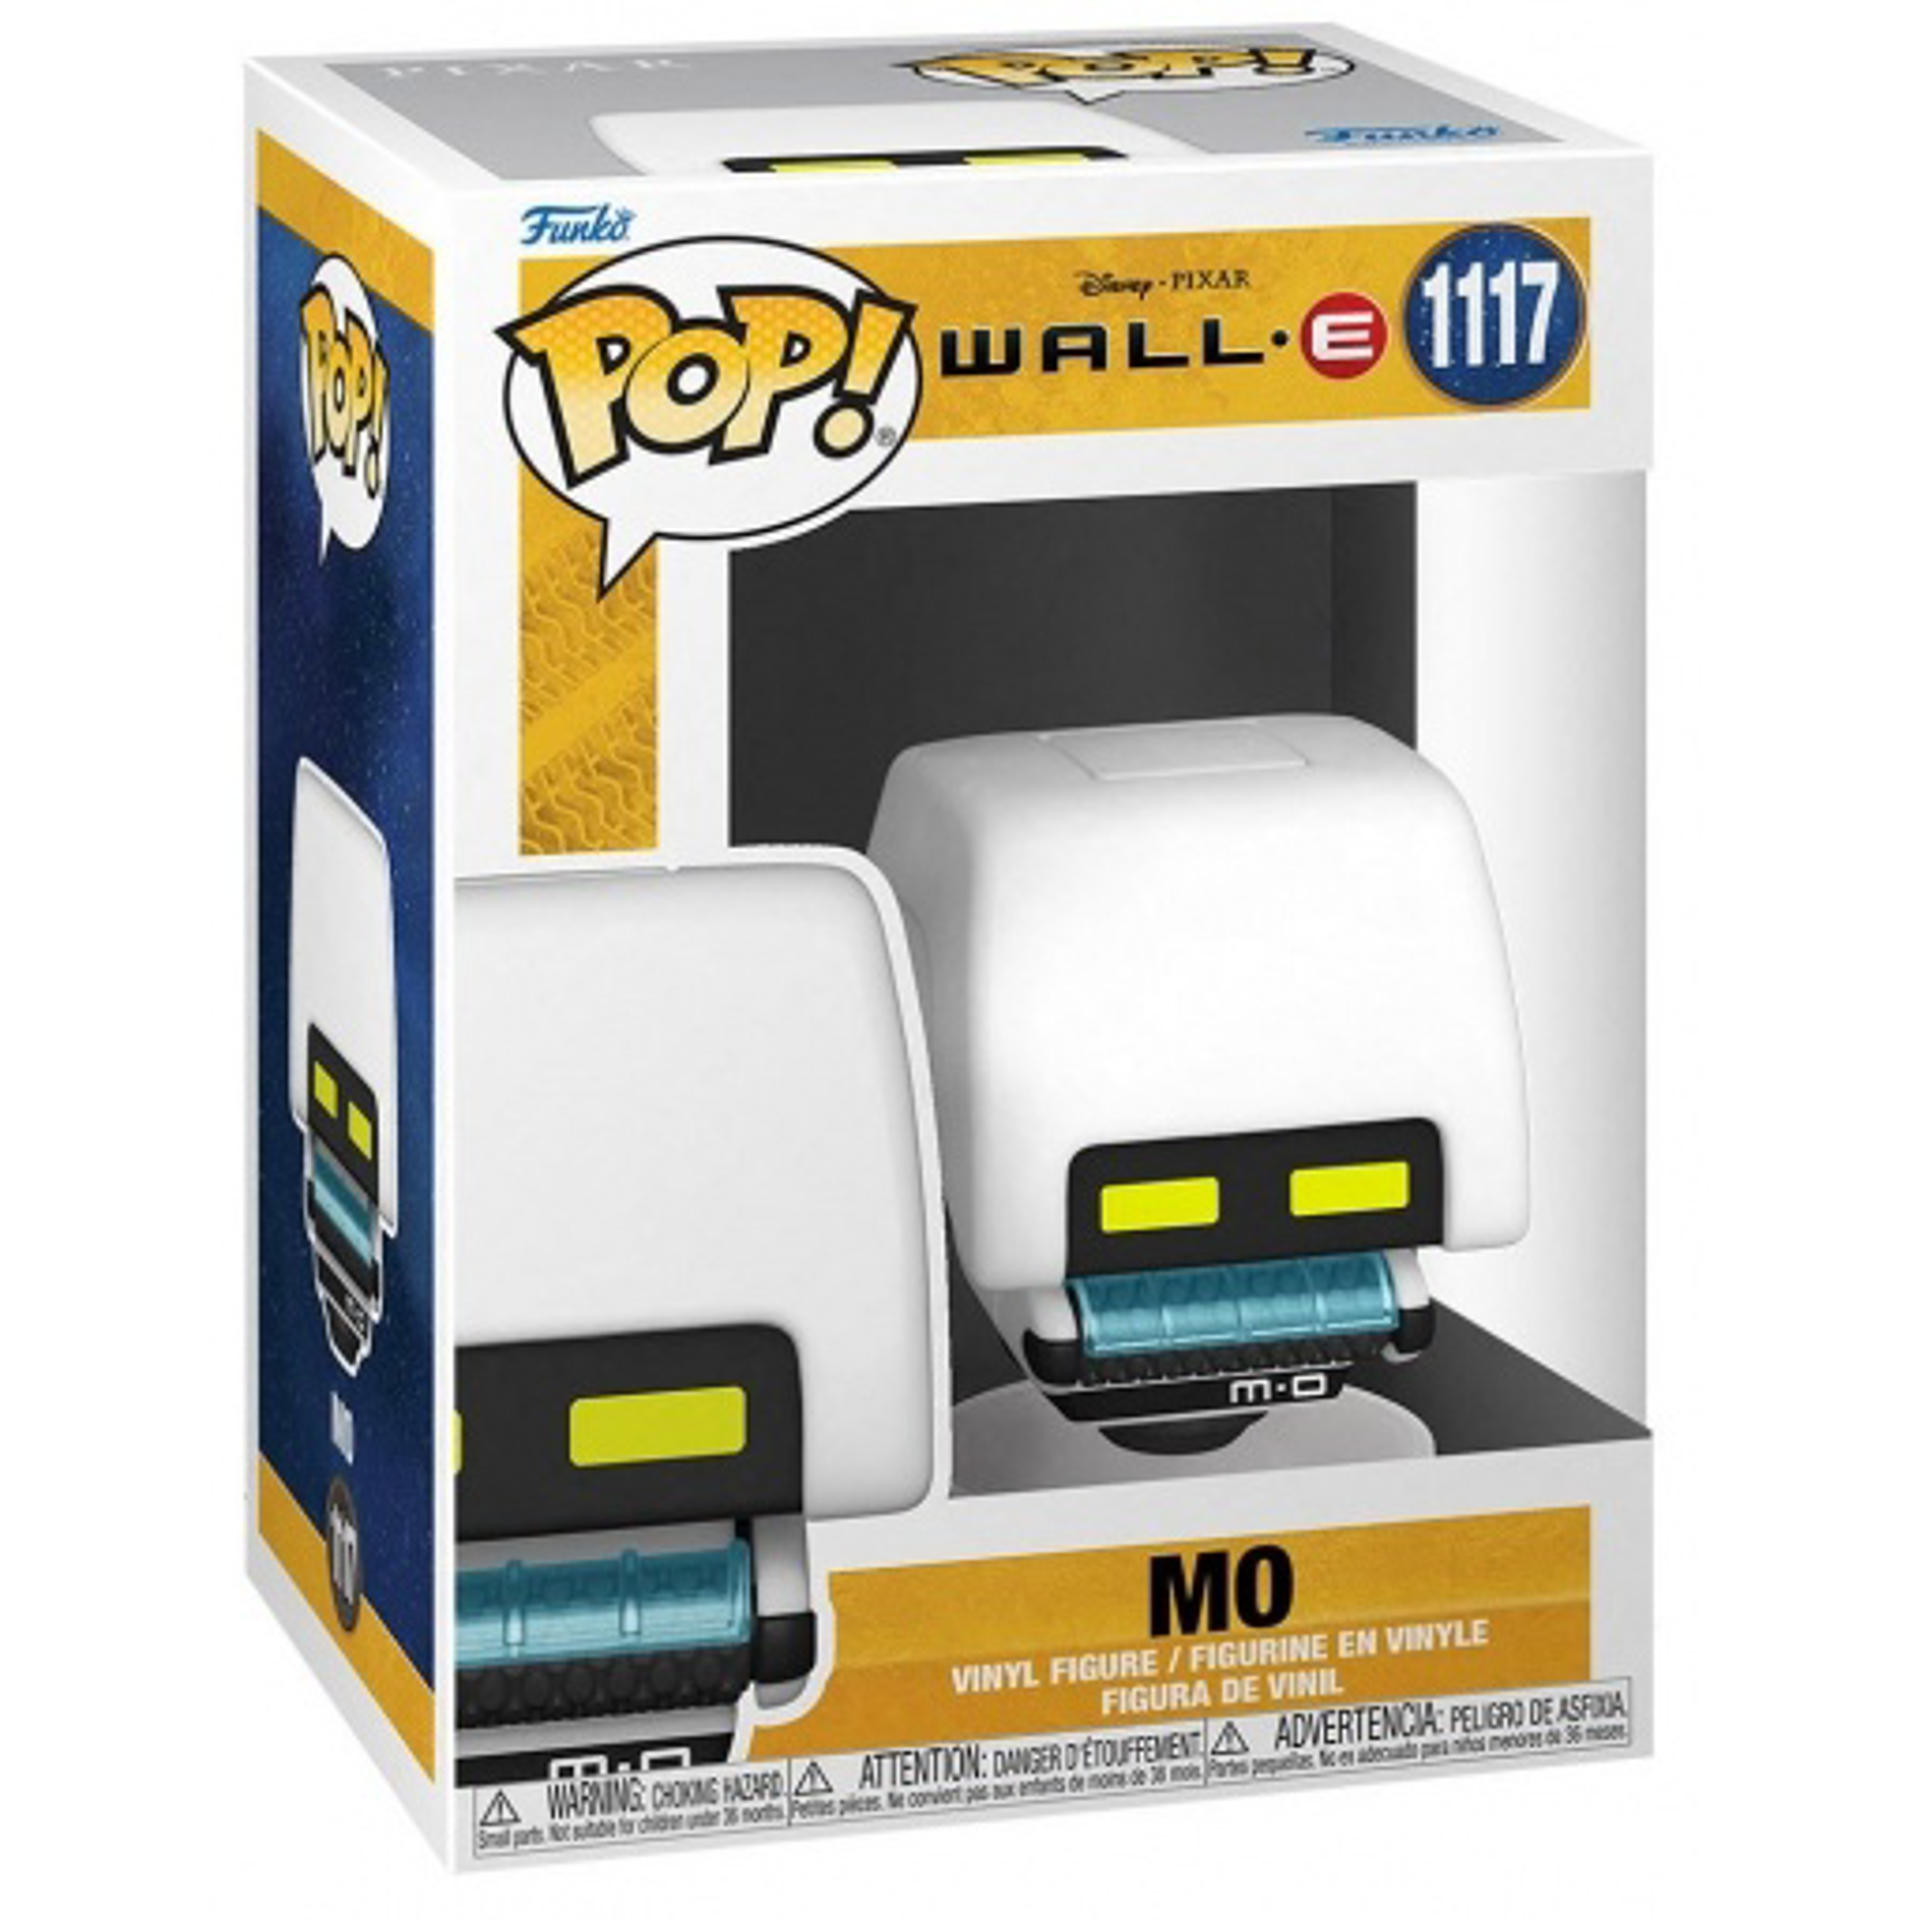 Funko Pop! Disney: Wall-E- Mo w/Chase ENG Merchandising